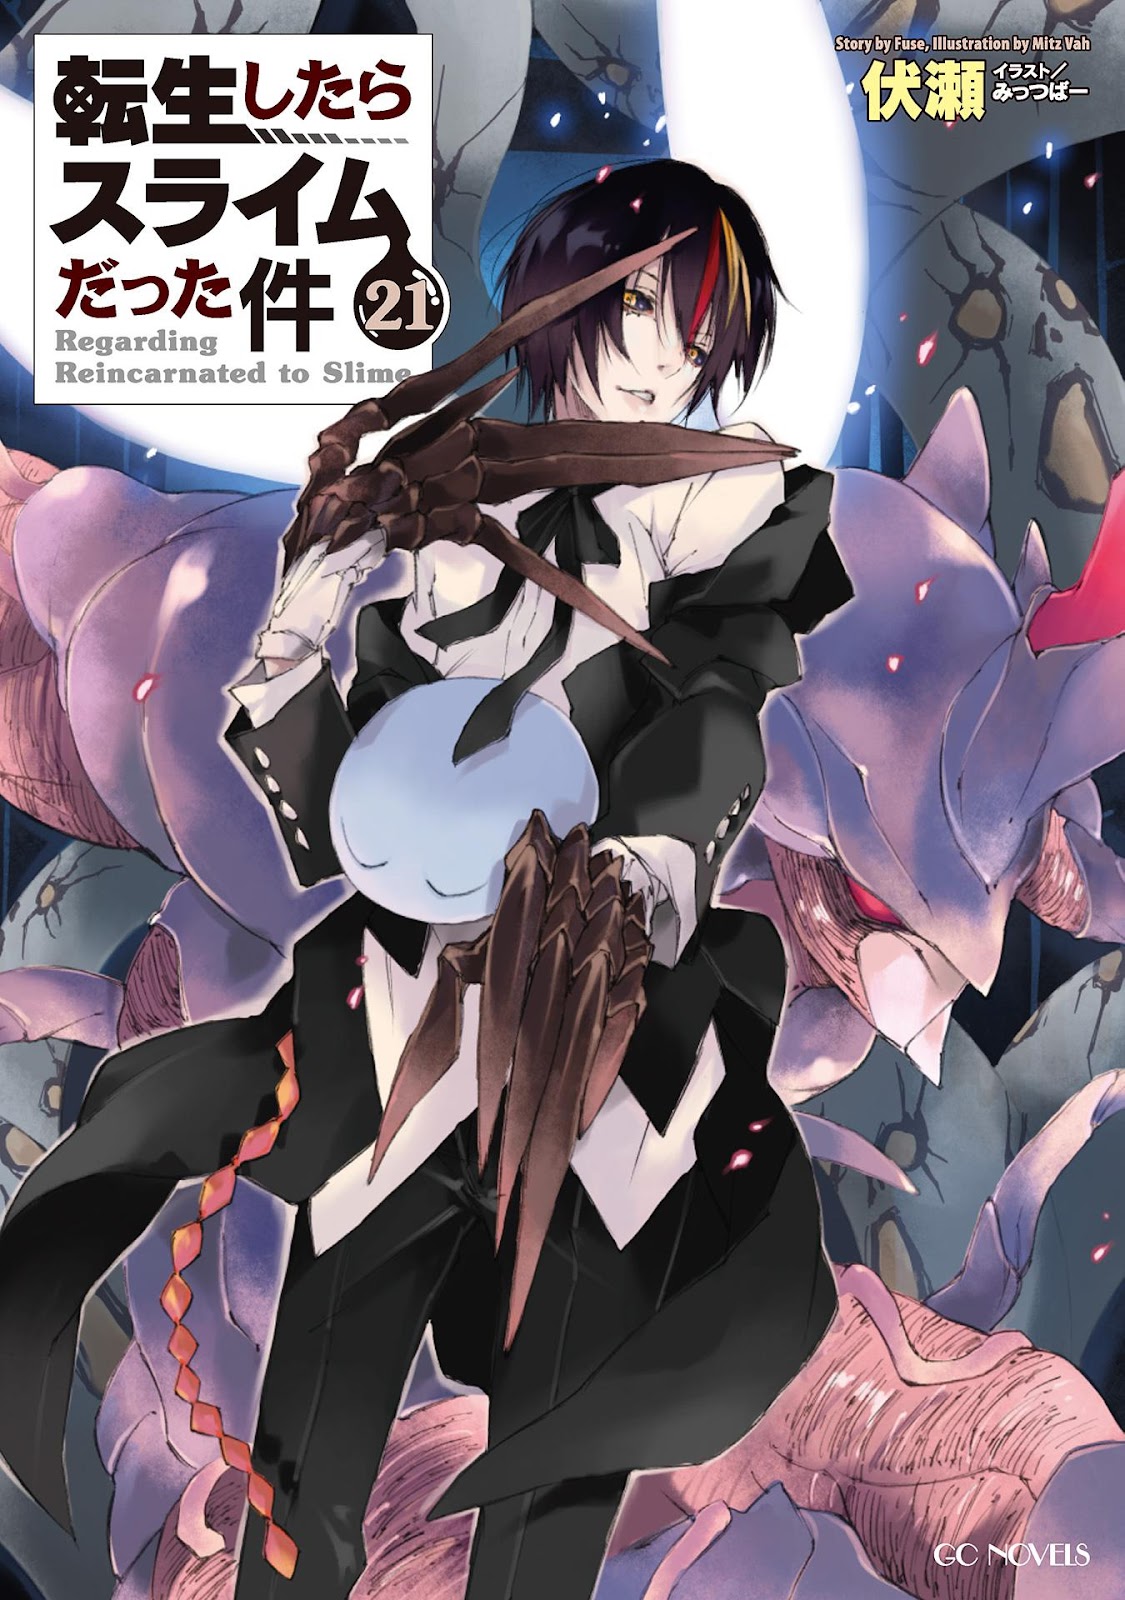 Ruidrive - Ilustrasi Light Novel Tensei Shitara Slime datta ken - Volume 21 - 01